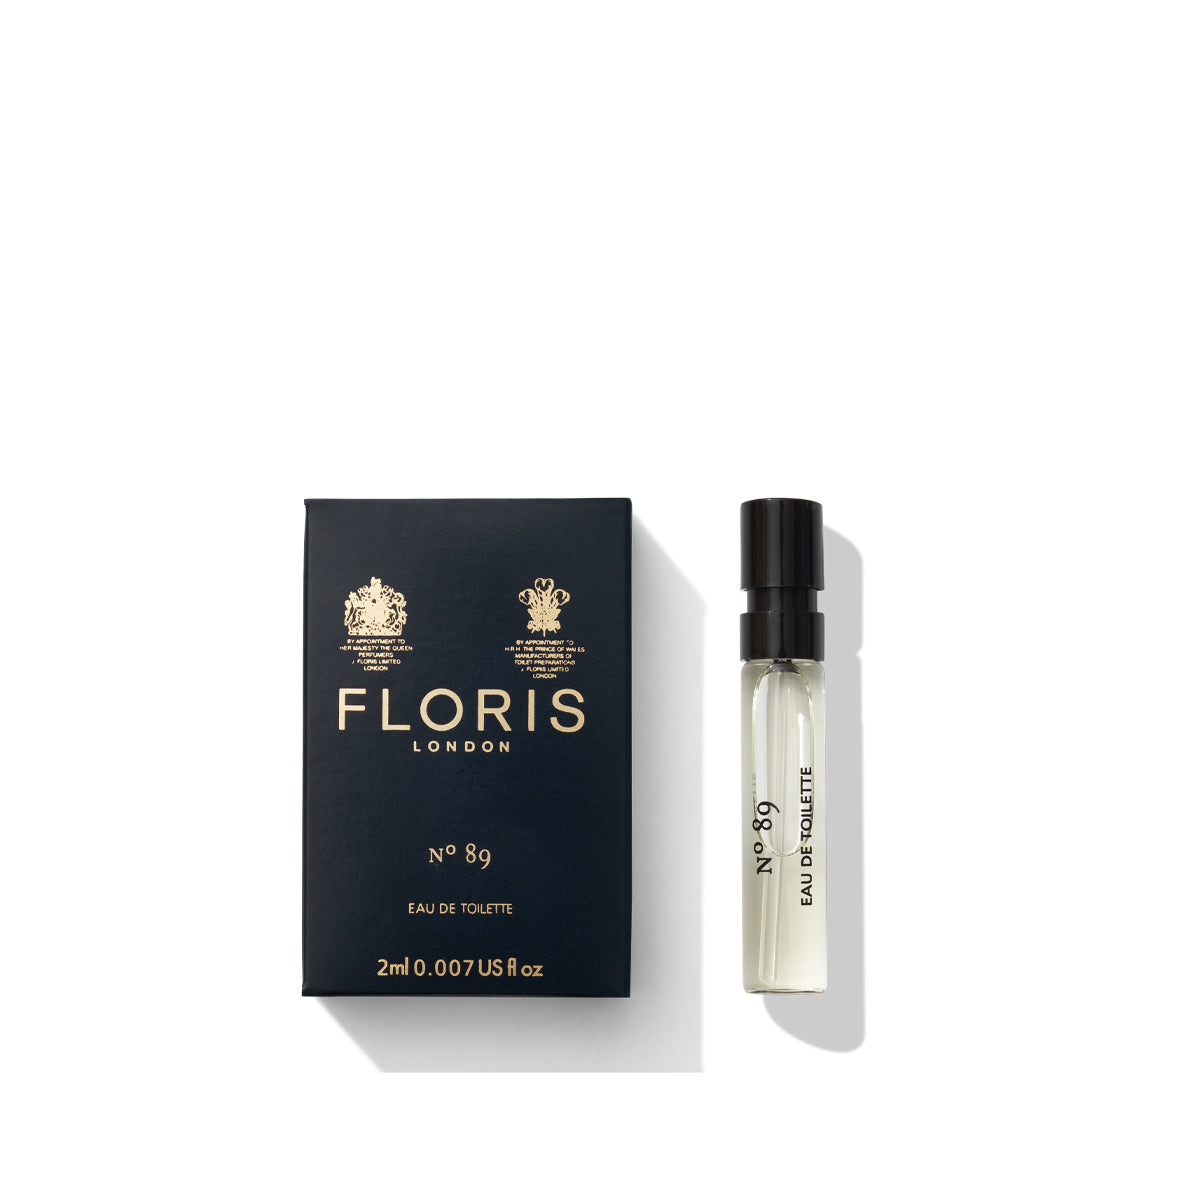 Floris London's No. 89 Eau de Toilette sample, a quintessential fragrance for gentlemen, sits elegantly next to its box on a pristine white background.